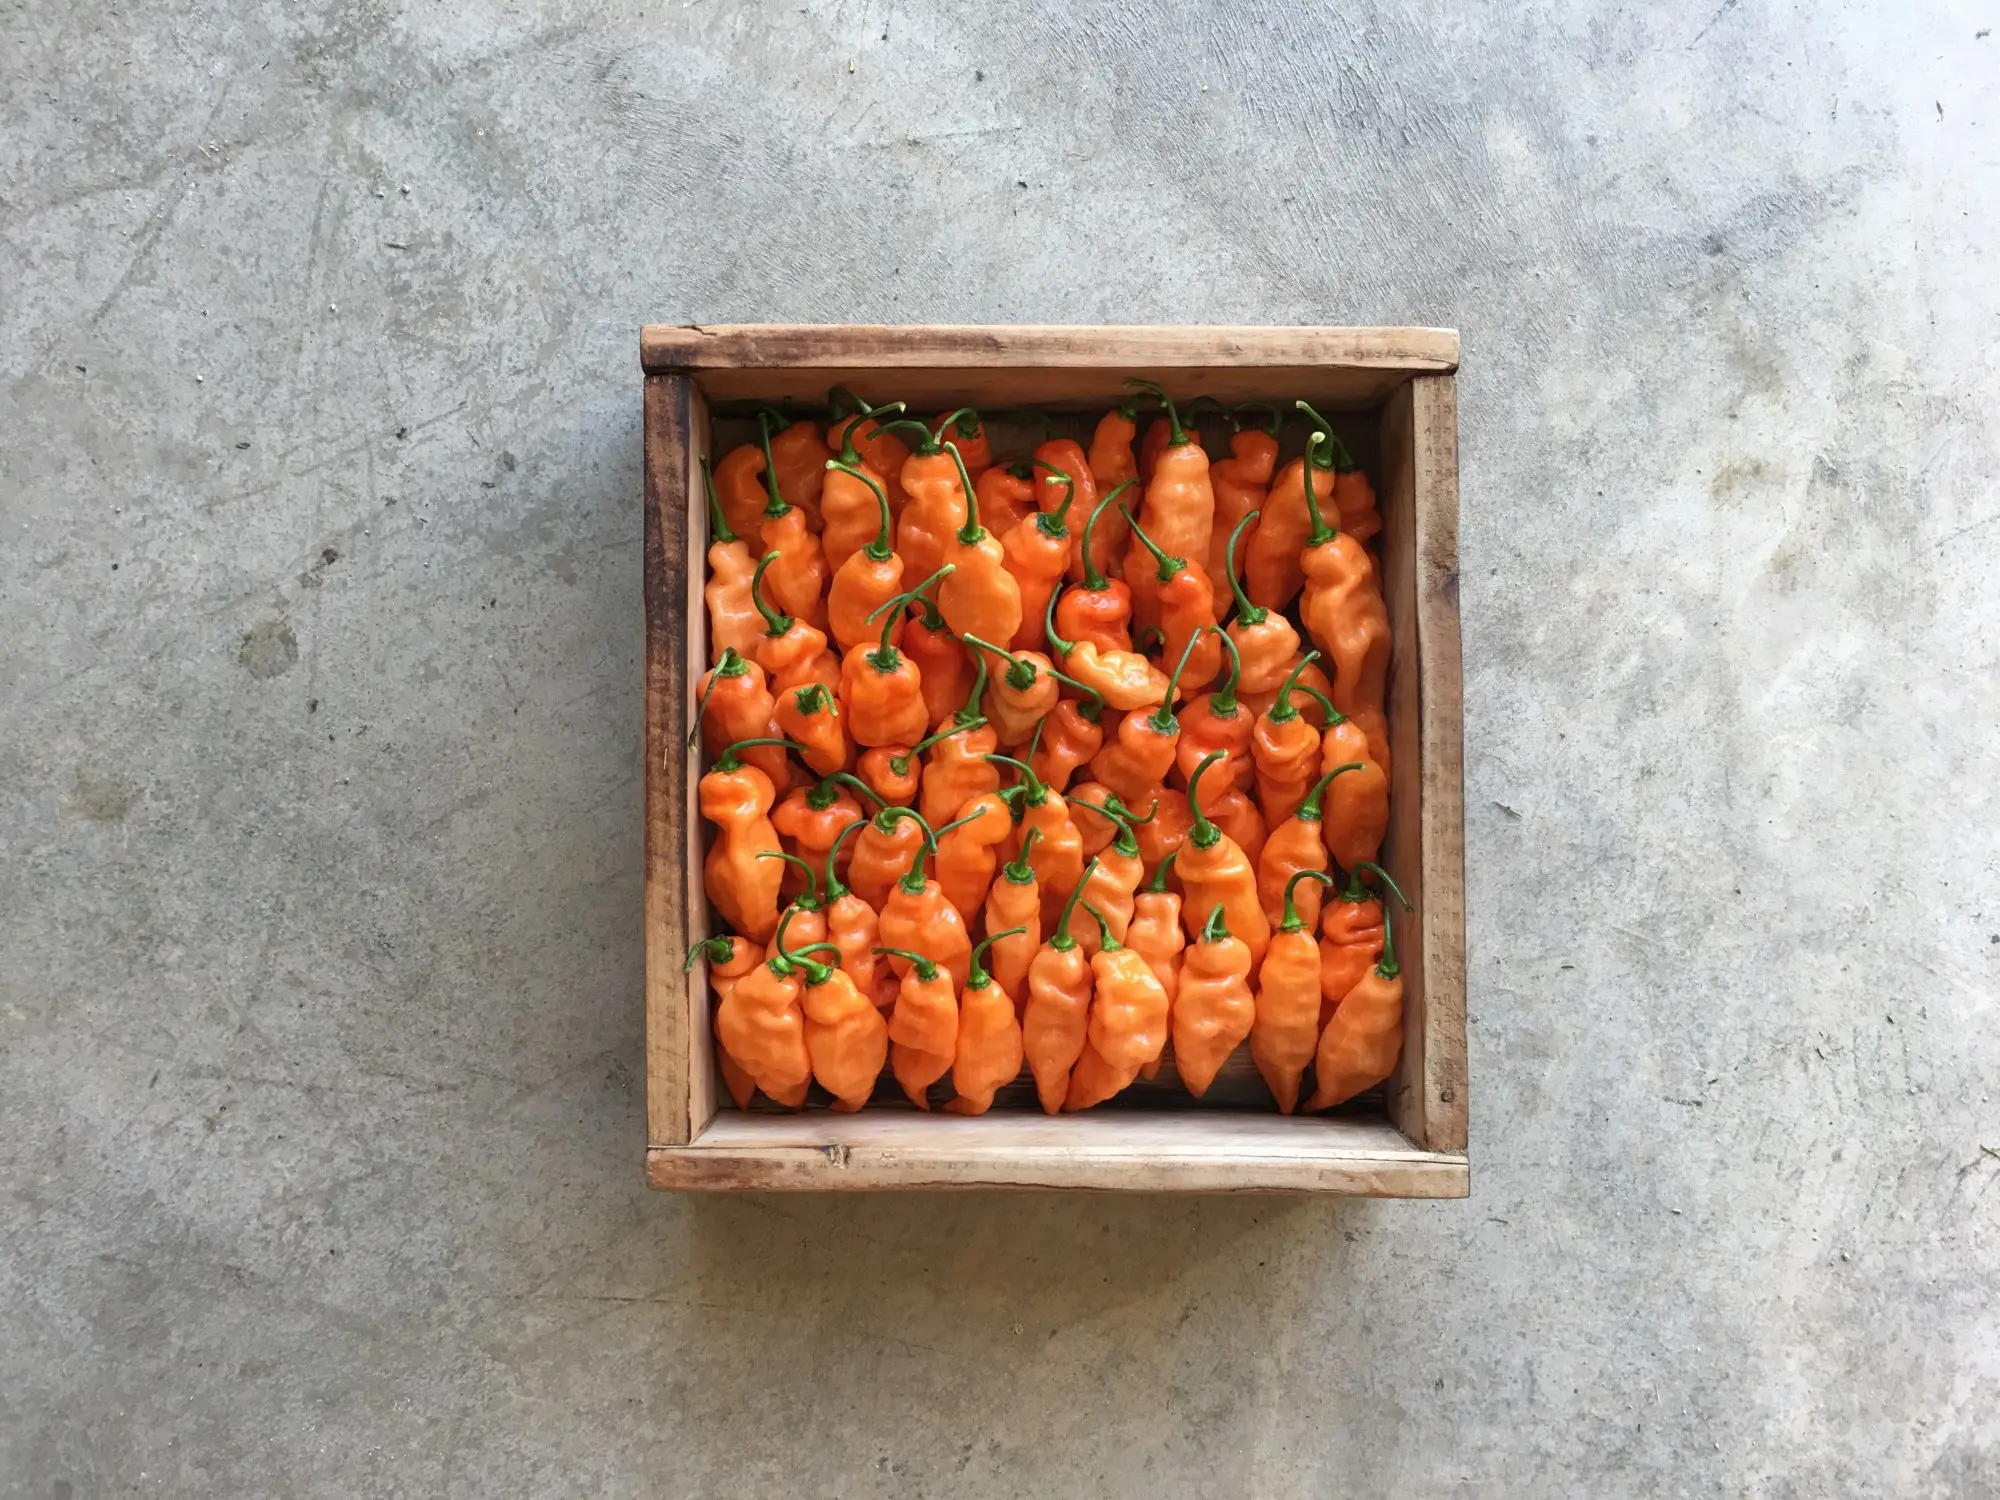 a box of oranges